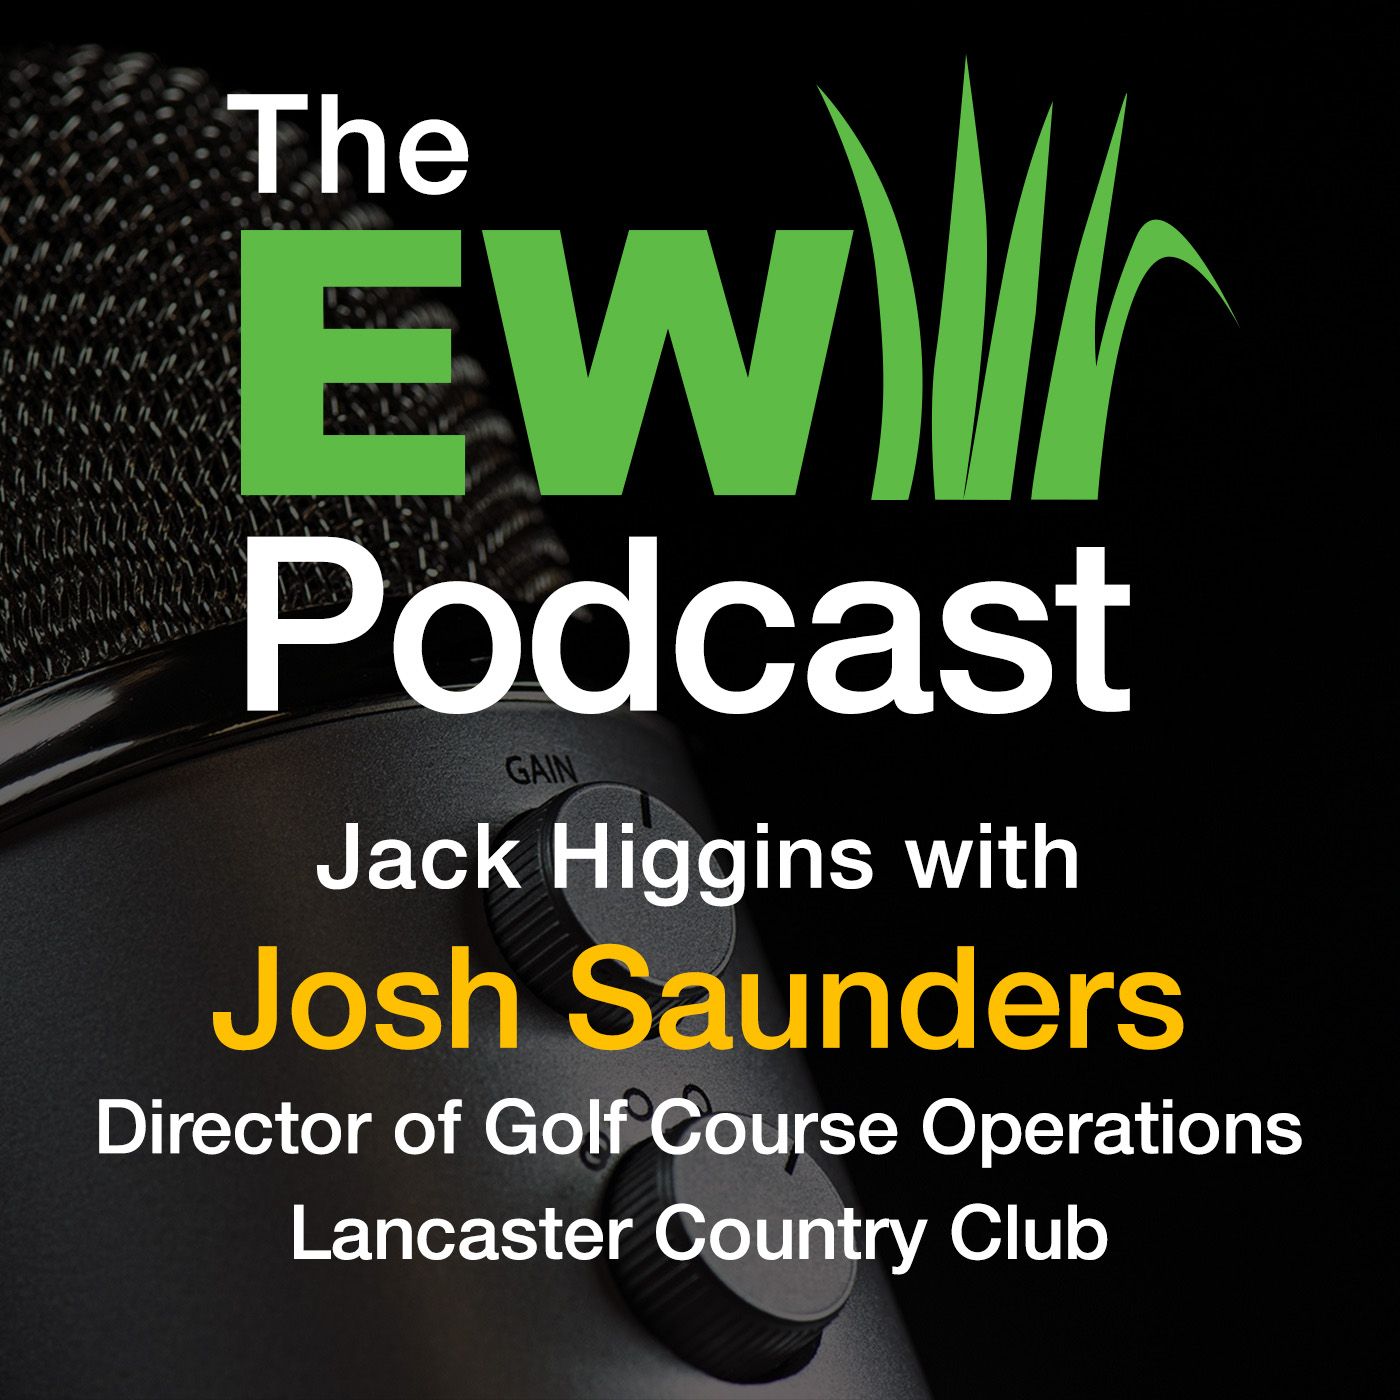 The EW Podcast - Jack Higgins with Josh Saunders